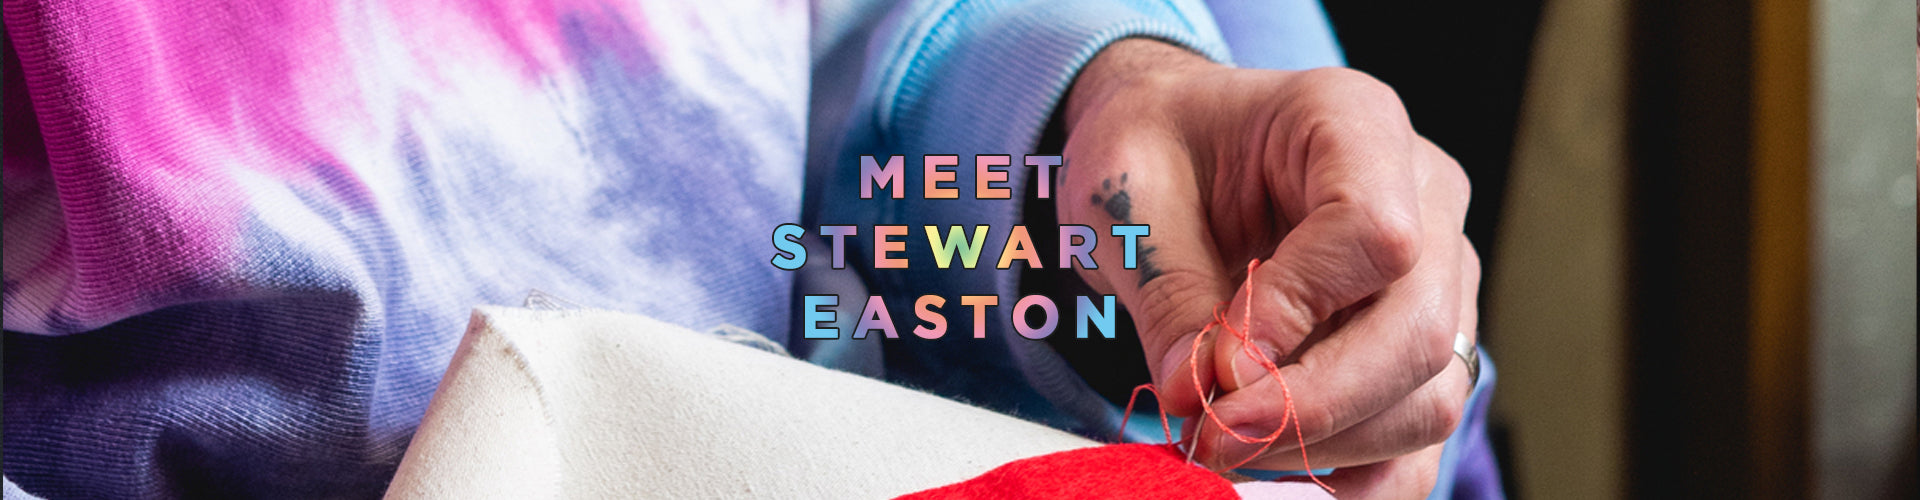 Peace out! Meet Stewart Easton